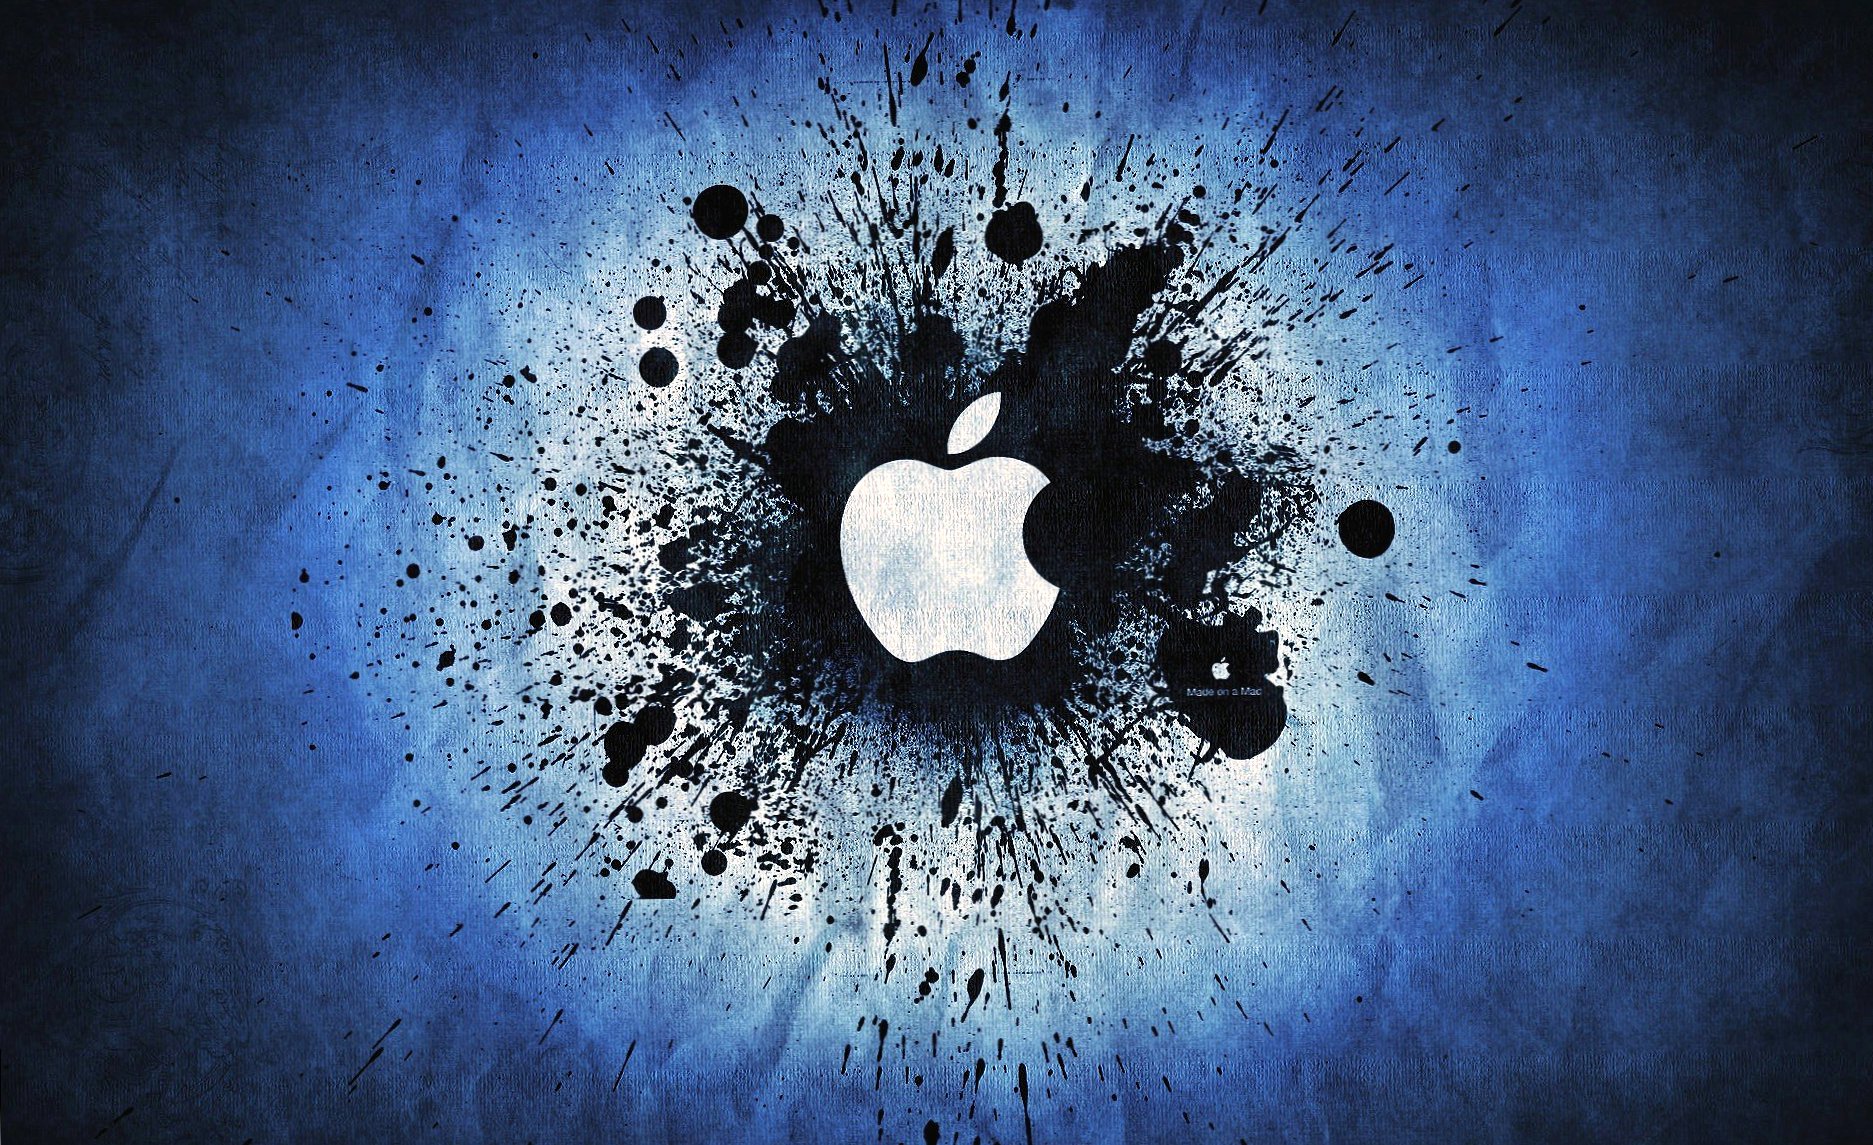 Black spot apple at 1024 x 1024 iPad size wallpapers HD quality